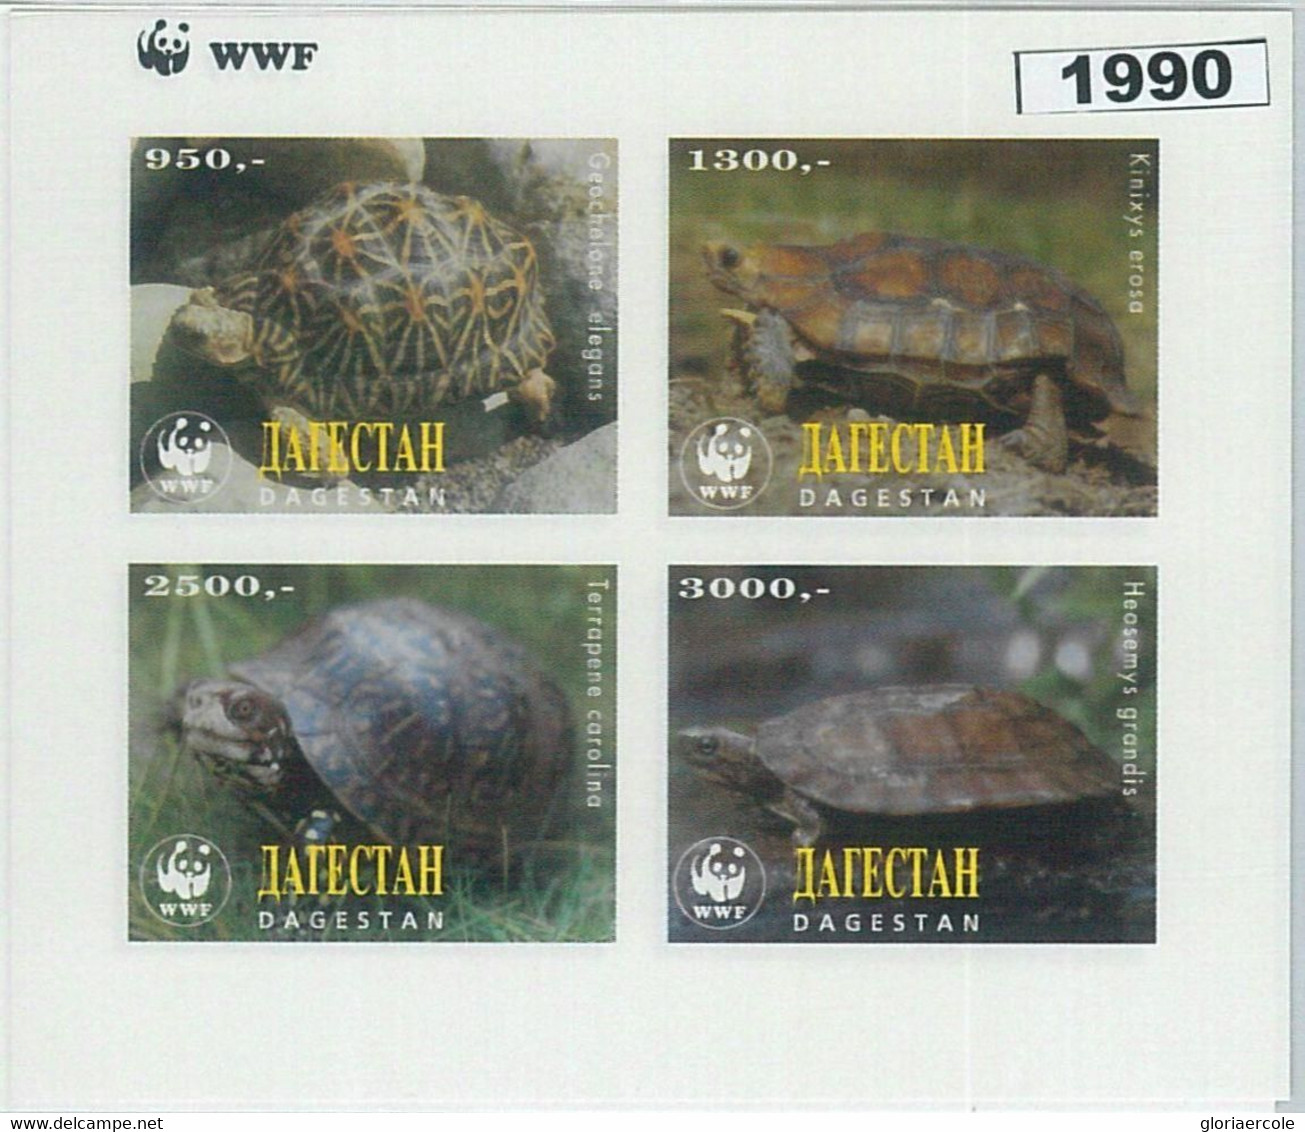 M1990 - RUSSIAN STATE, IMPERF SHEET: WWF, Turtles, Reptiles  R04.22 - Gebruikt